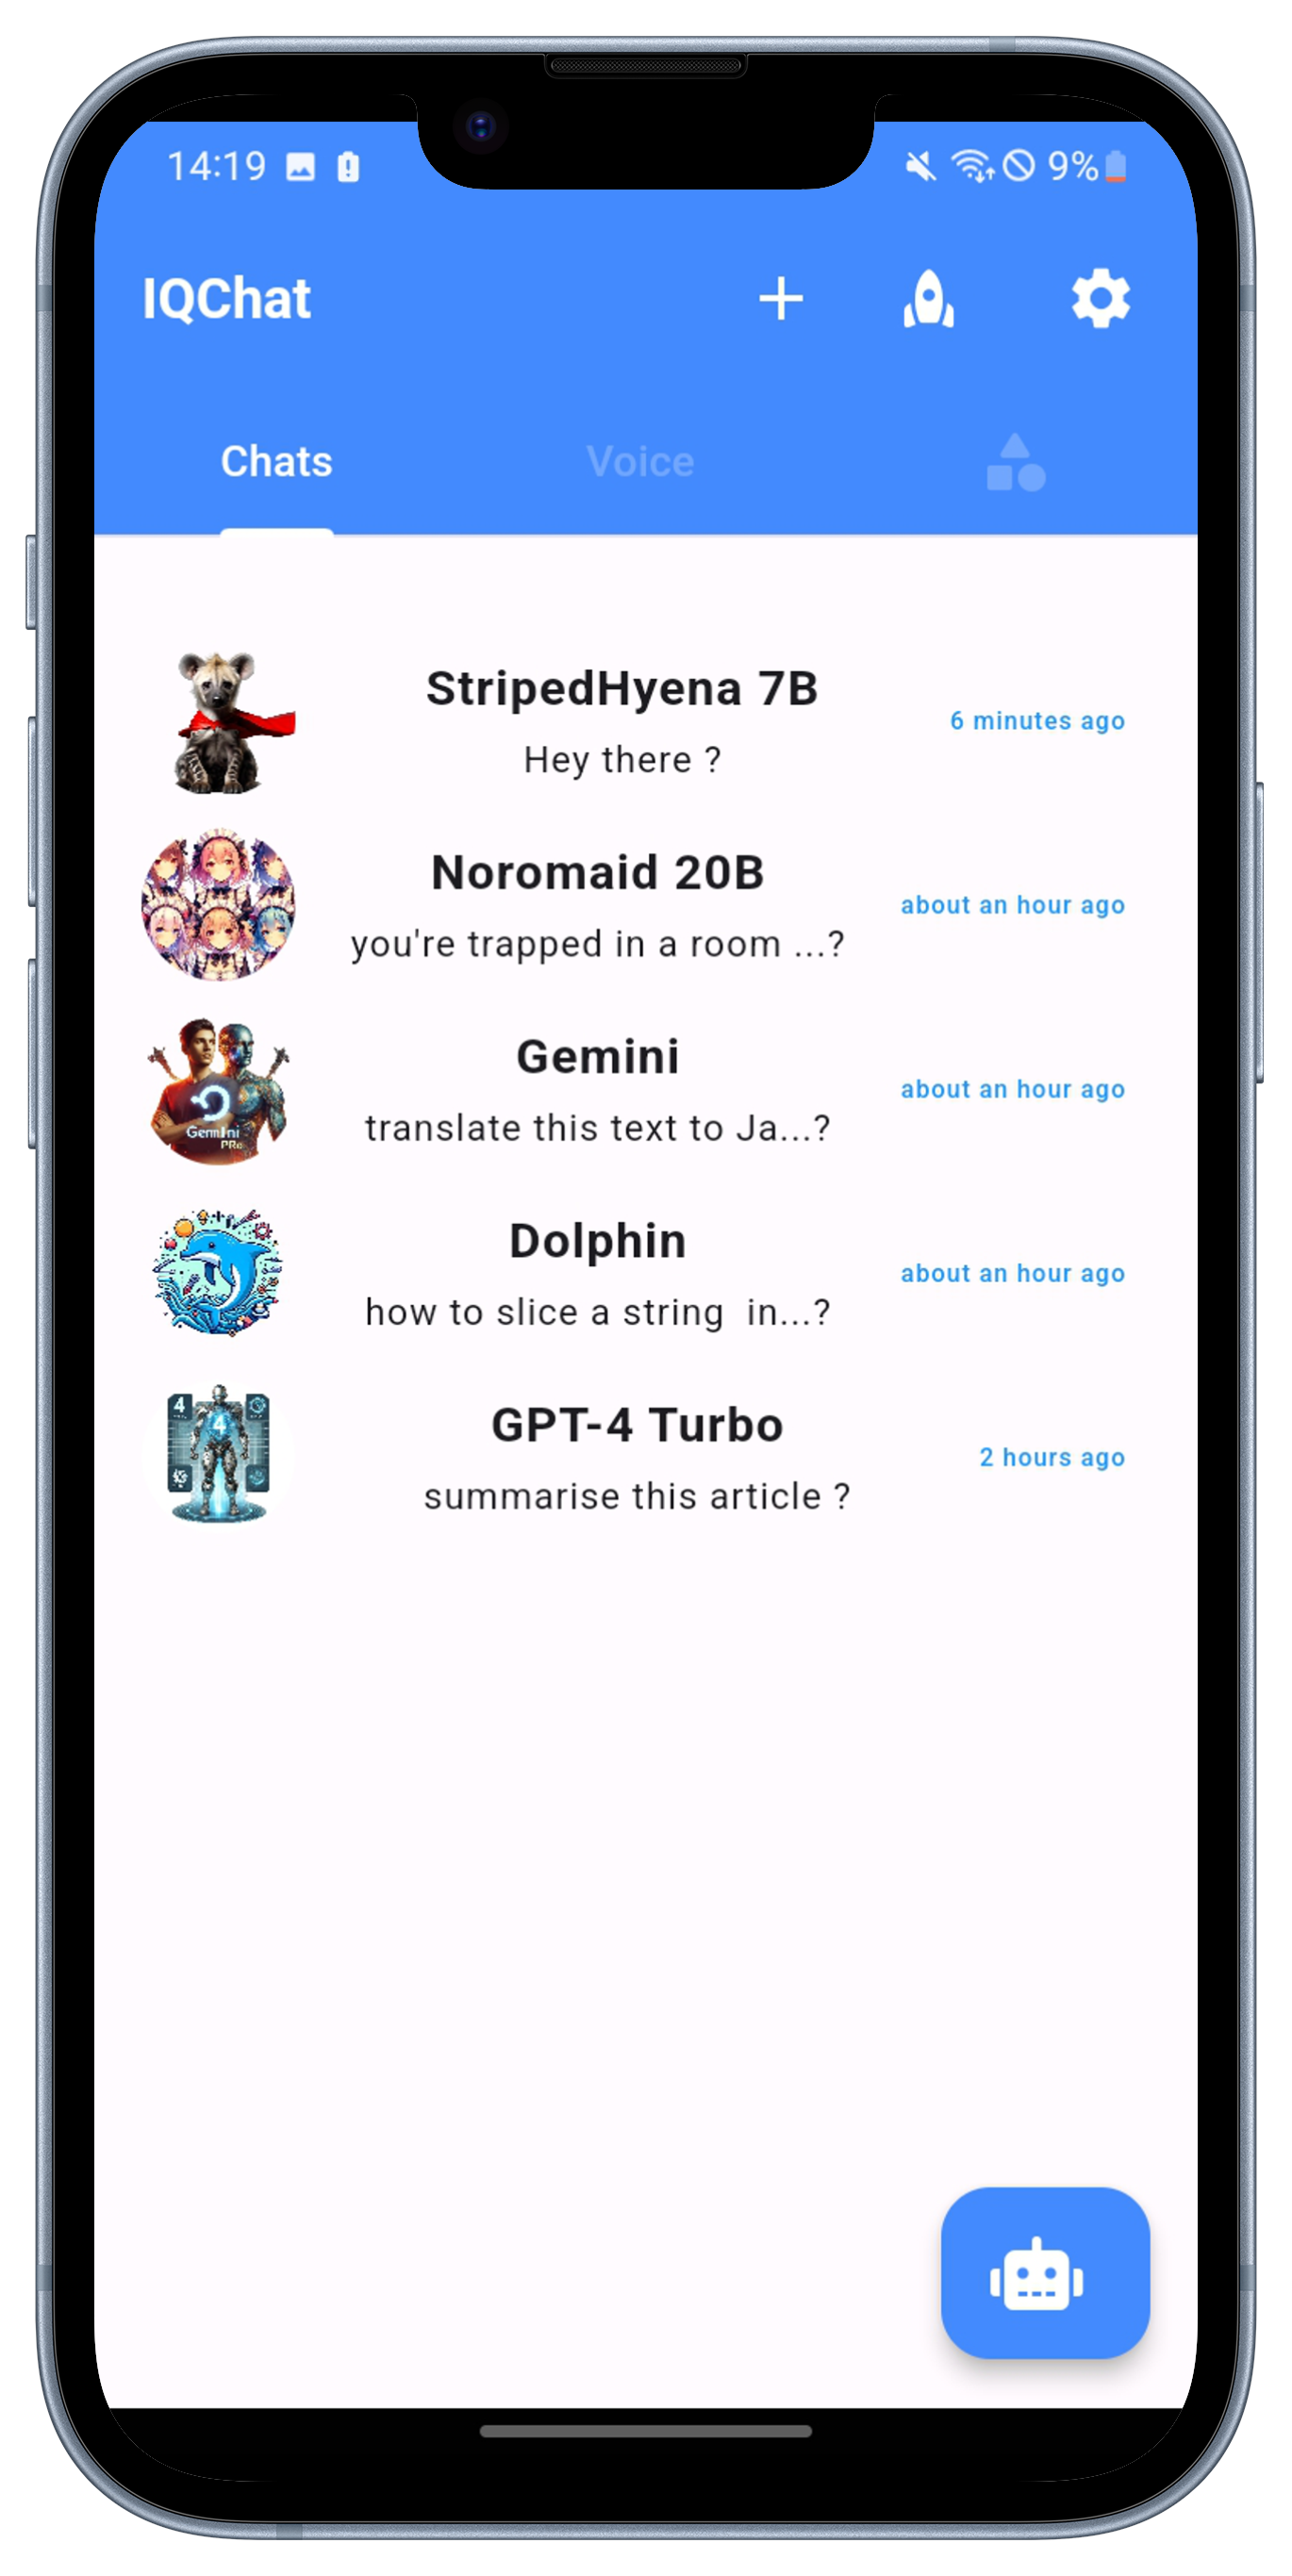 IQCHat App Screen UI iphone image